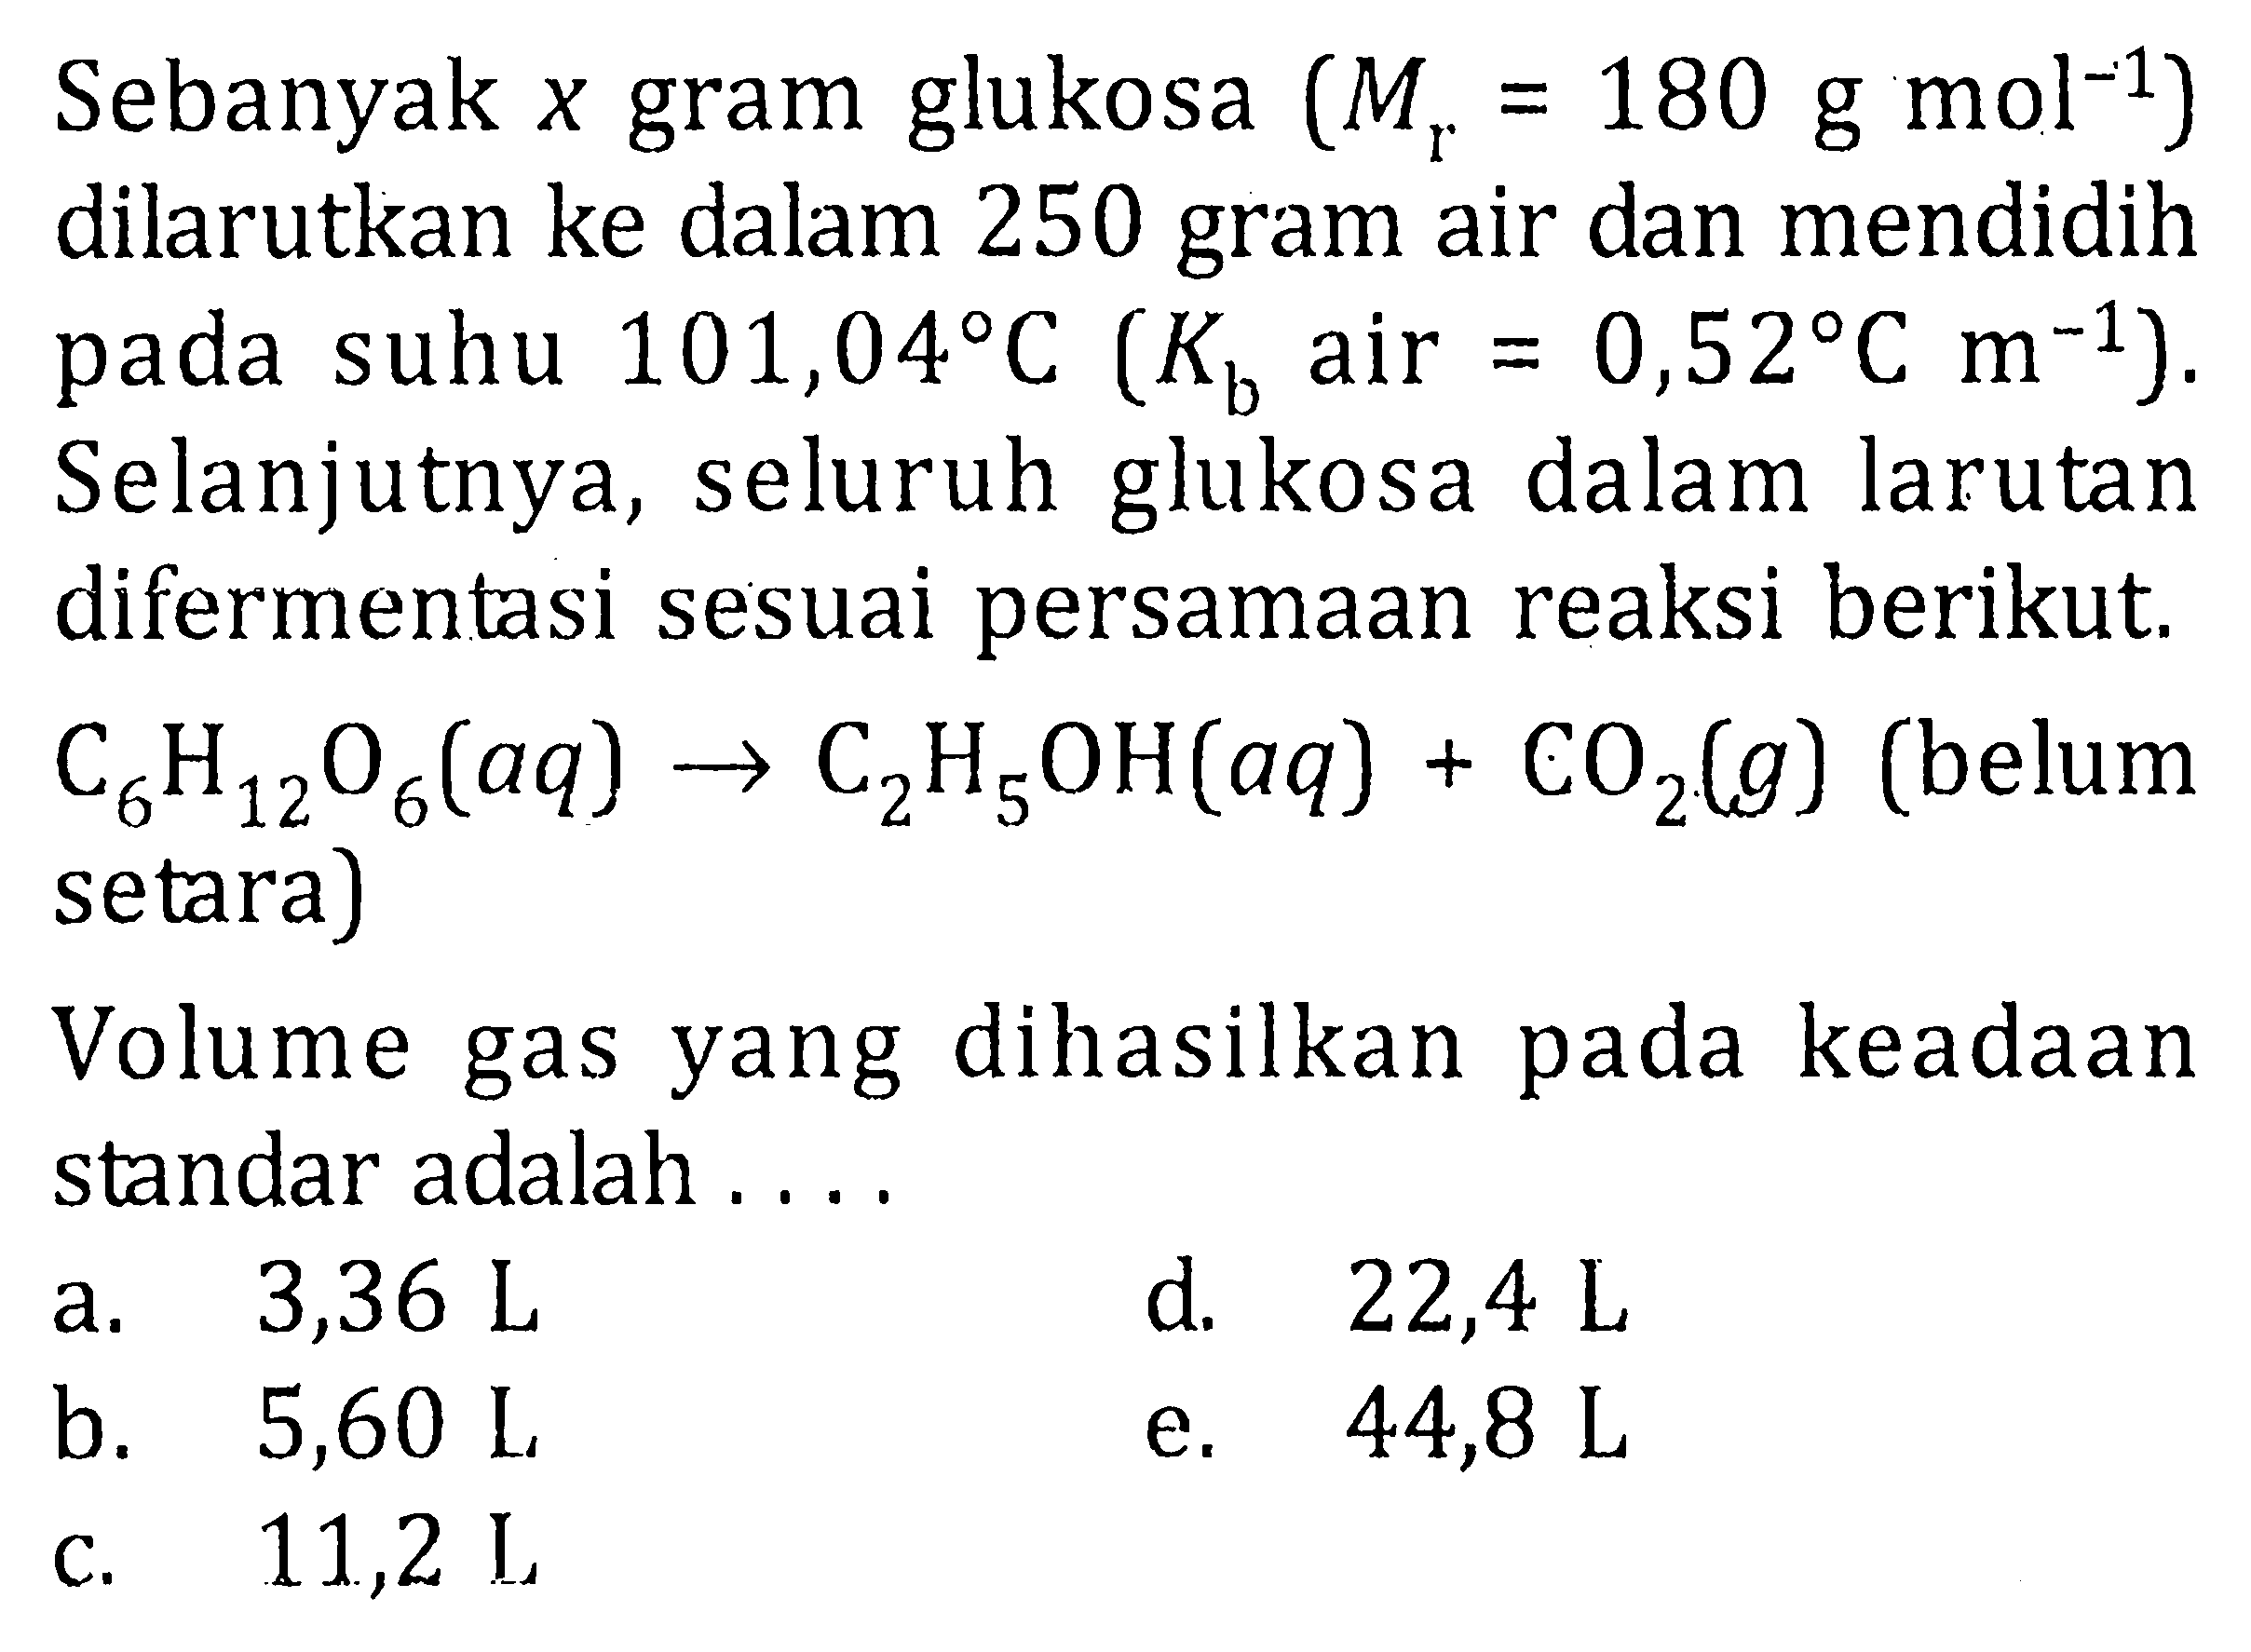 Sebanyak x gram glukosa (Mr = 180 gmol^-1) dilarutkan ke dalam 250 gram air dan mendidih pada suhu 101,04 C (Kb air = 0,52 C m^-1). Selanjutnya, seluruh glukosa dalam larutan difermentasi sesuai persamaan reaksi berikut, C6H12O6(aq) -> C2H5OH(aq) + CO2(g) (belum setara) Volume gas yang dihasilkan pada keadaan standar adalah ....